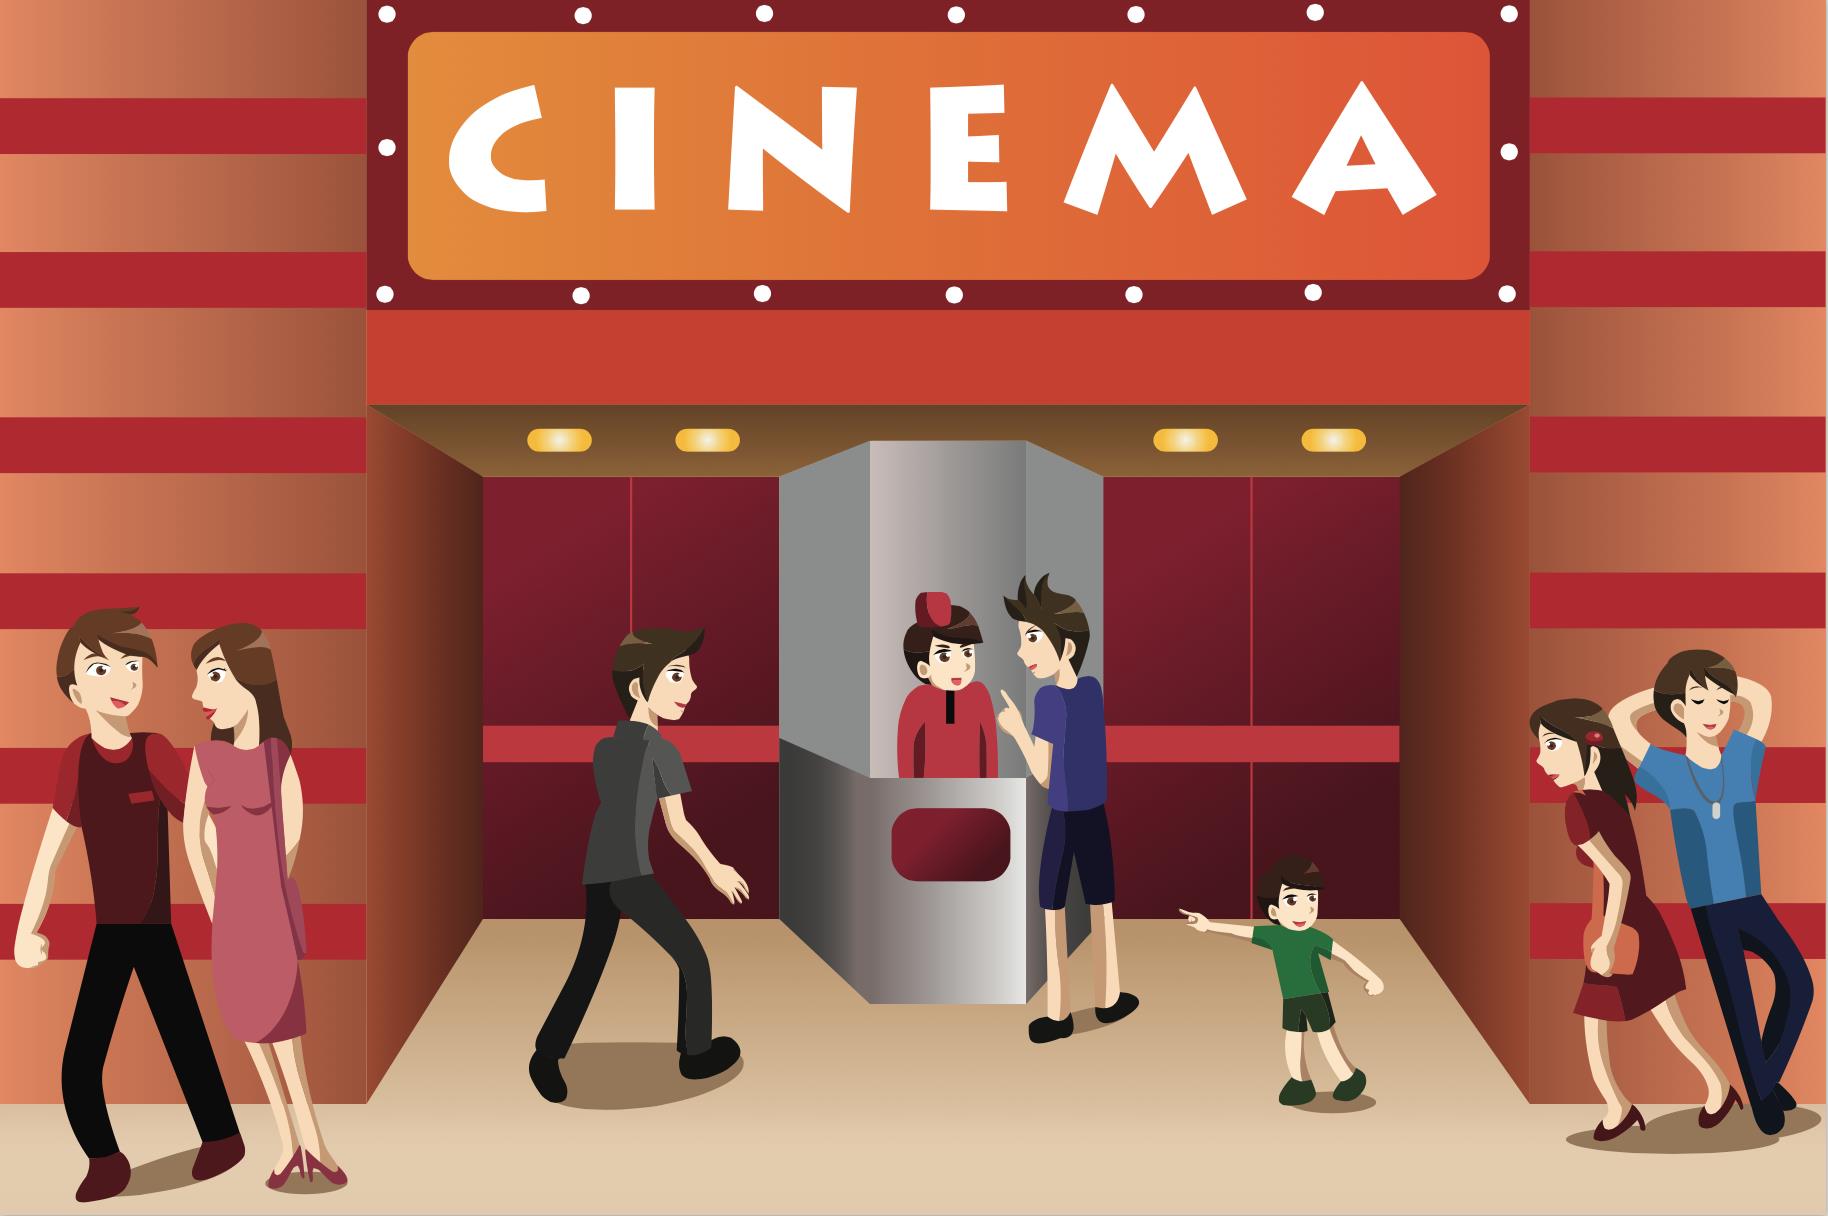 We can go to the cinema. Cinema картина для детей. Дети идут в кинотеатр рисунок. Кинотеатр рисунок.